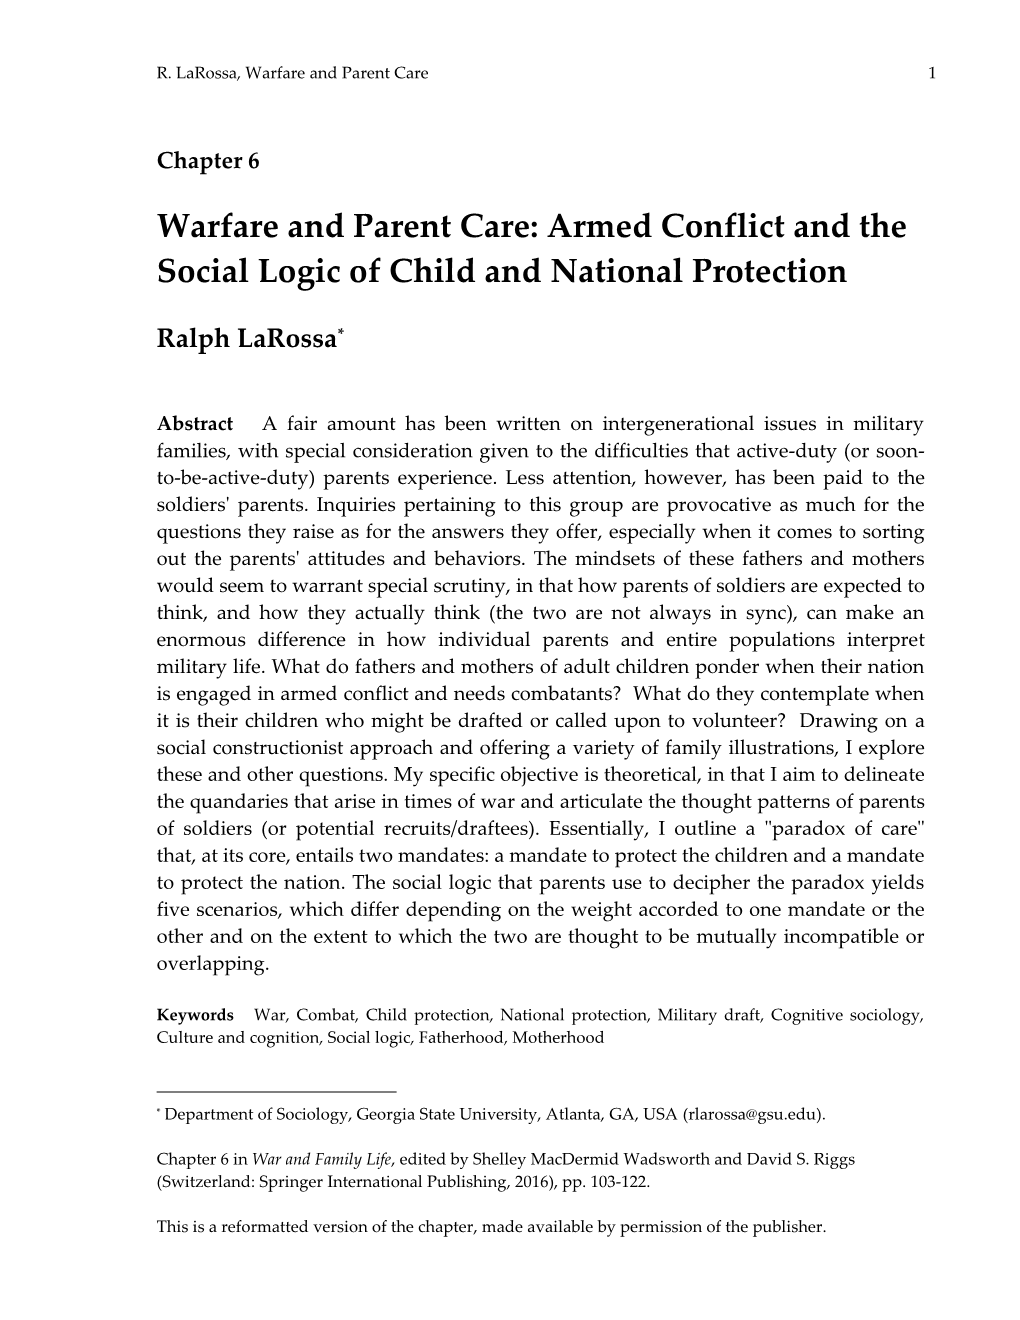 Warfare and Parent Care 1